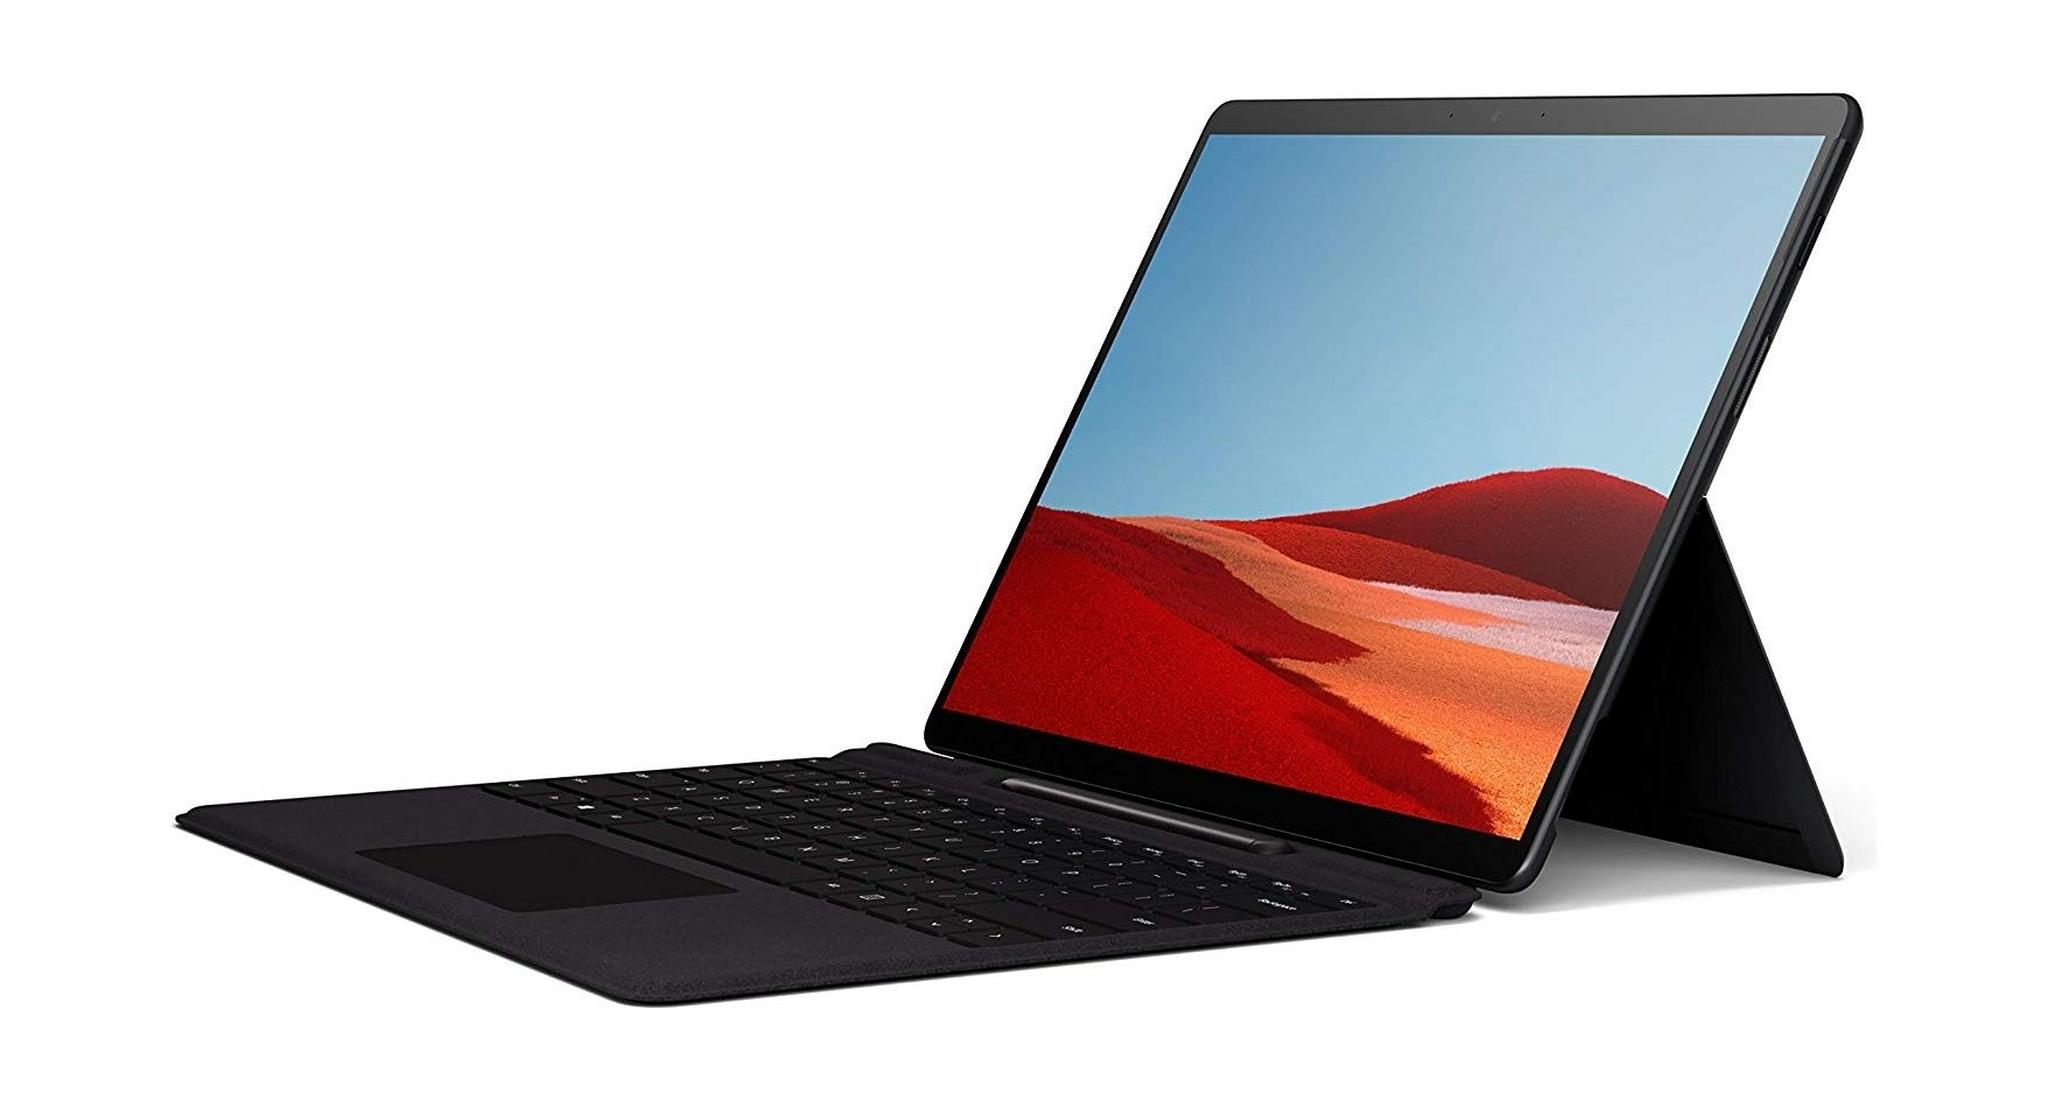 Microsoft Surface Pro X SQ1 16GB 256GB SSD 13-inch Convertible Laptop - Black